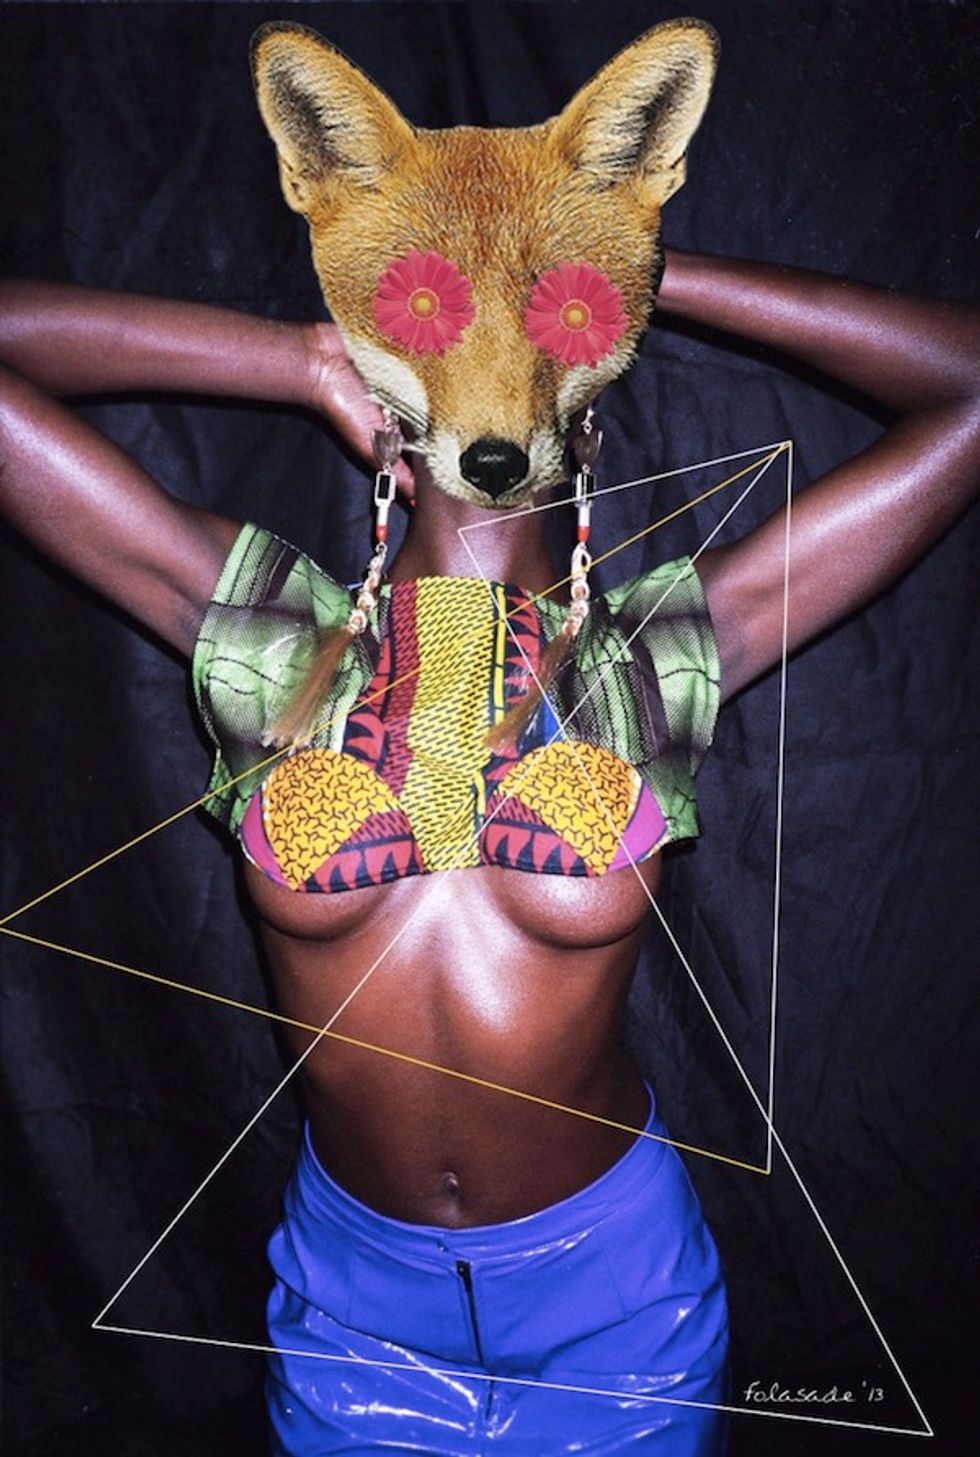 Interview: Folasade Adeoso Talks Digital Art, Destiny's Child & Tumblr